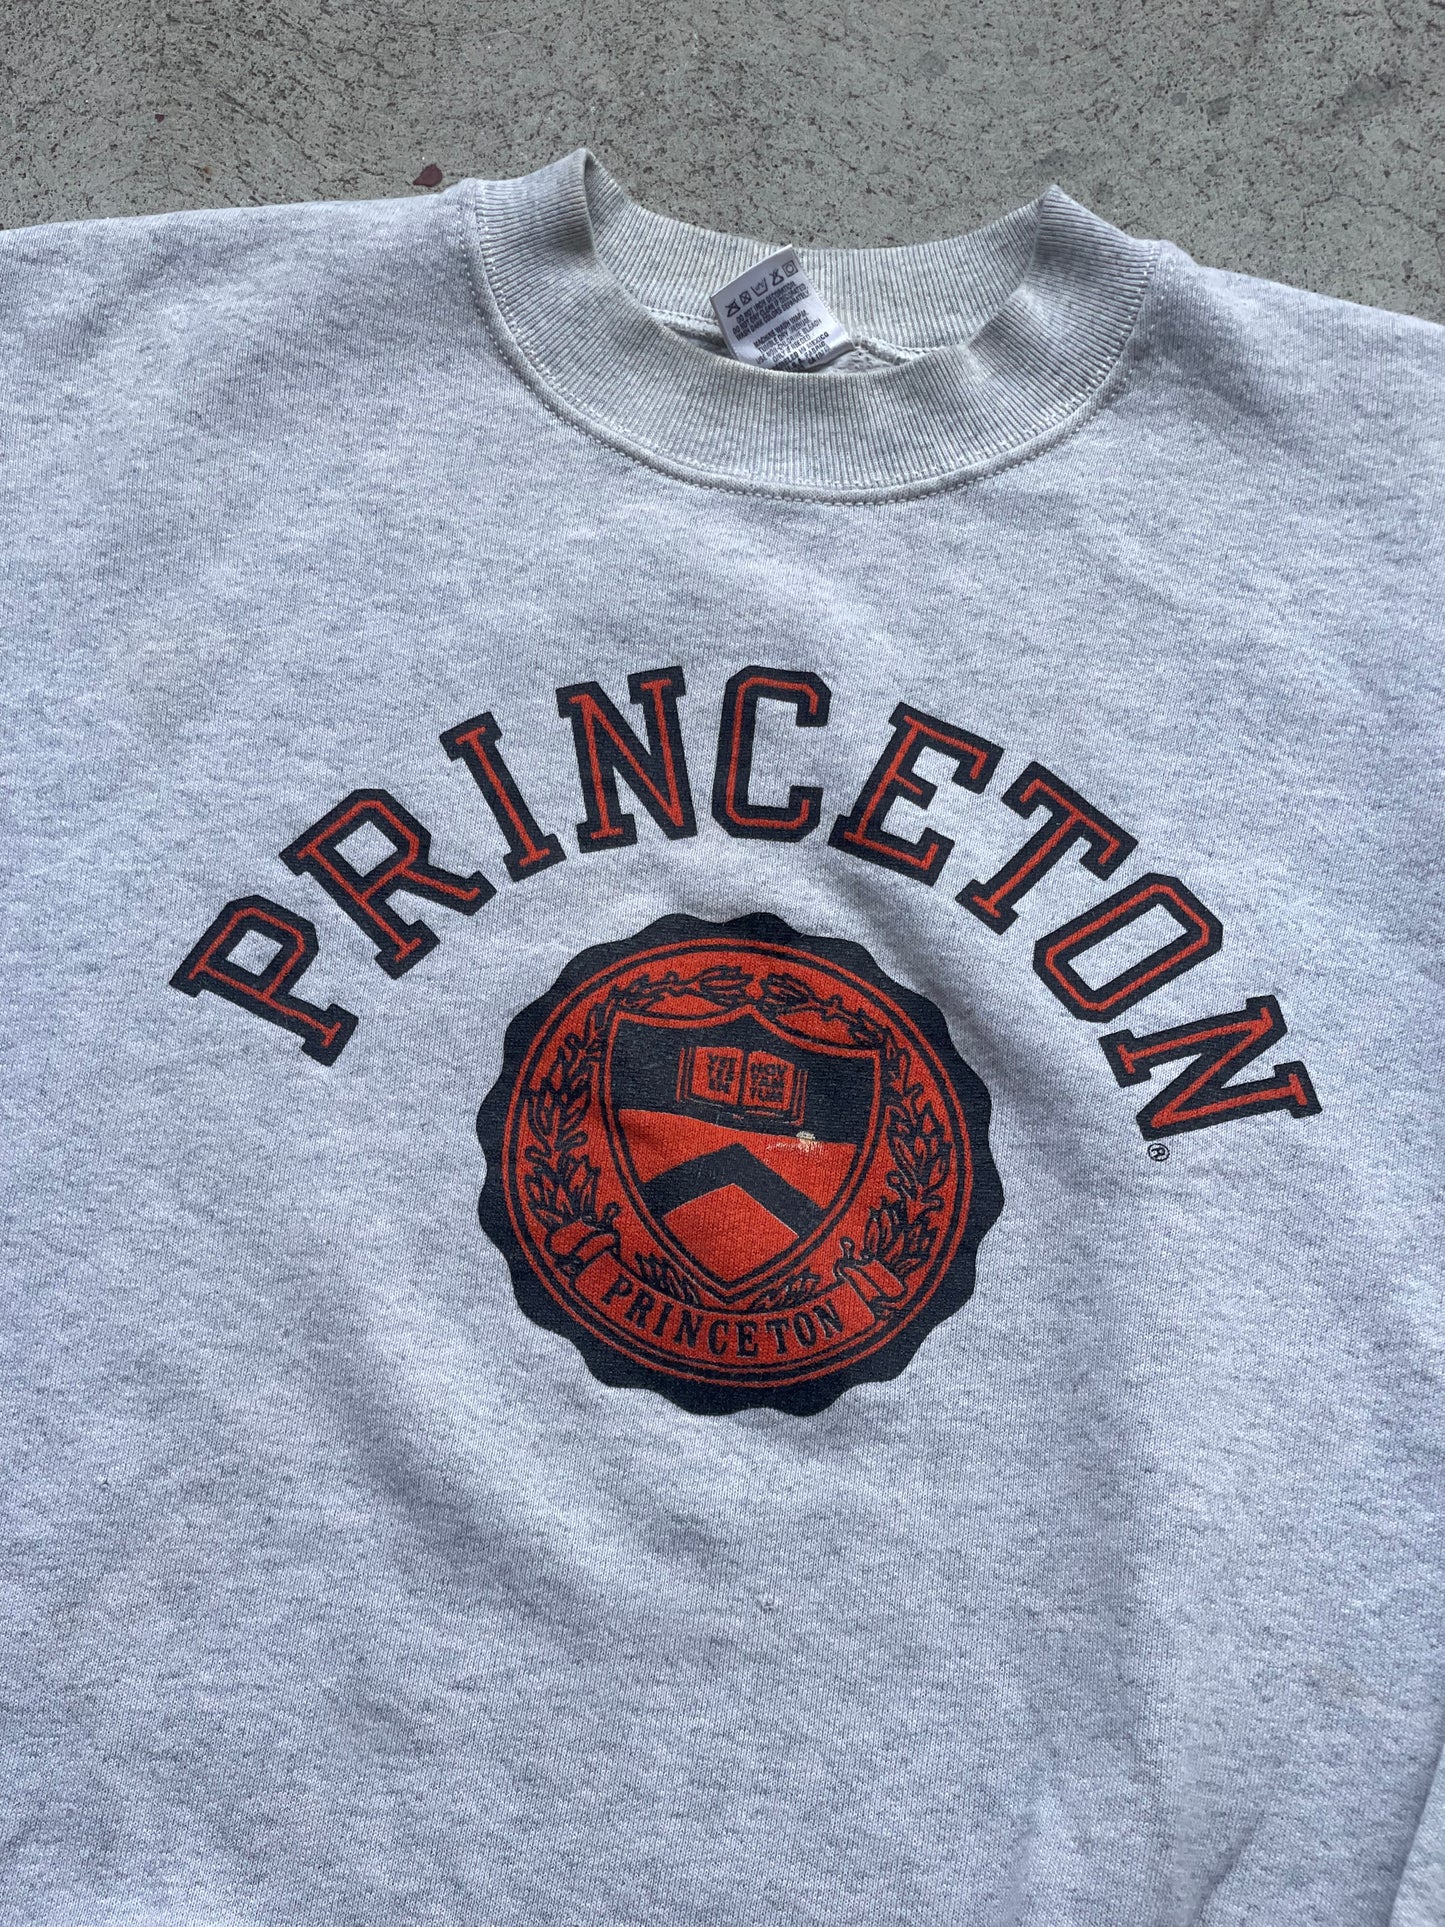 Vintage 90s Princeton Crewneck Sweatshirt - M/L